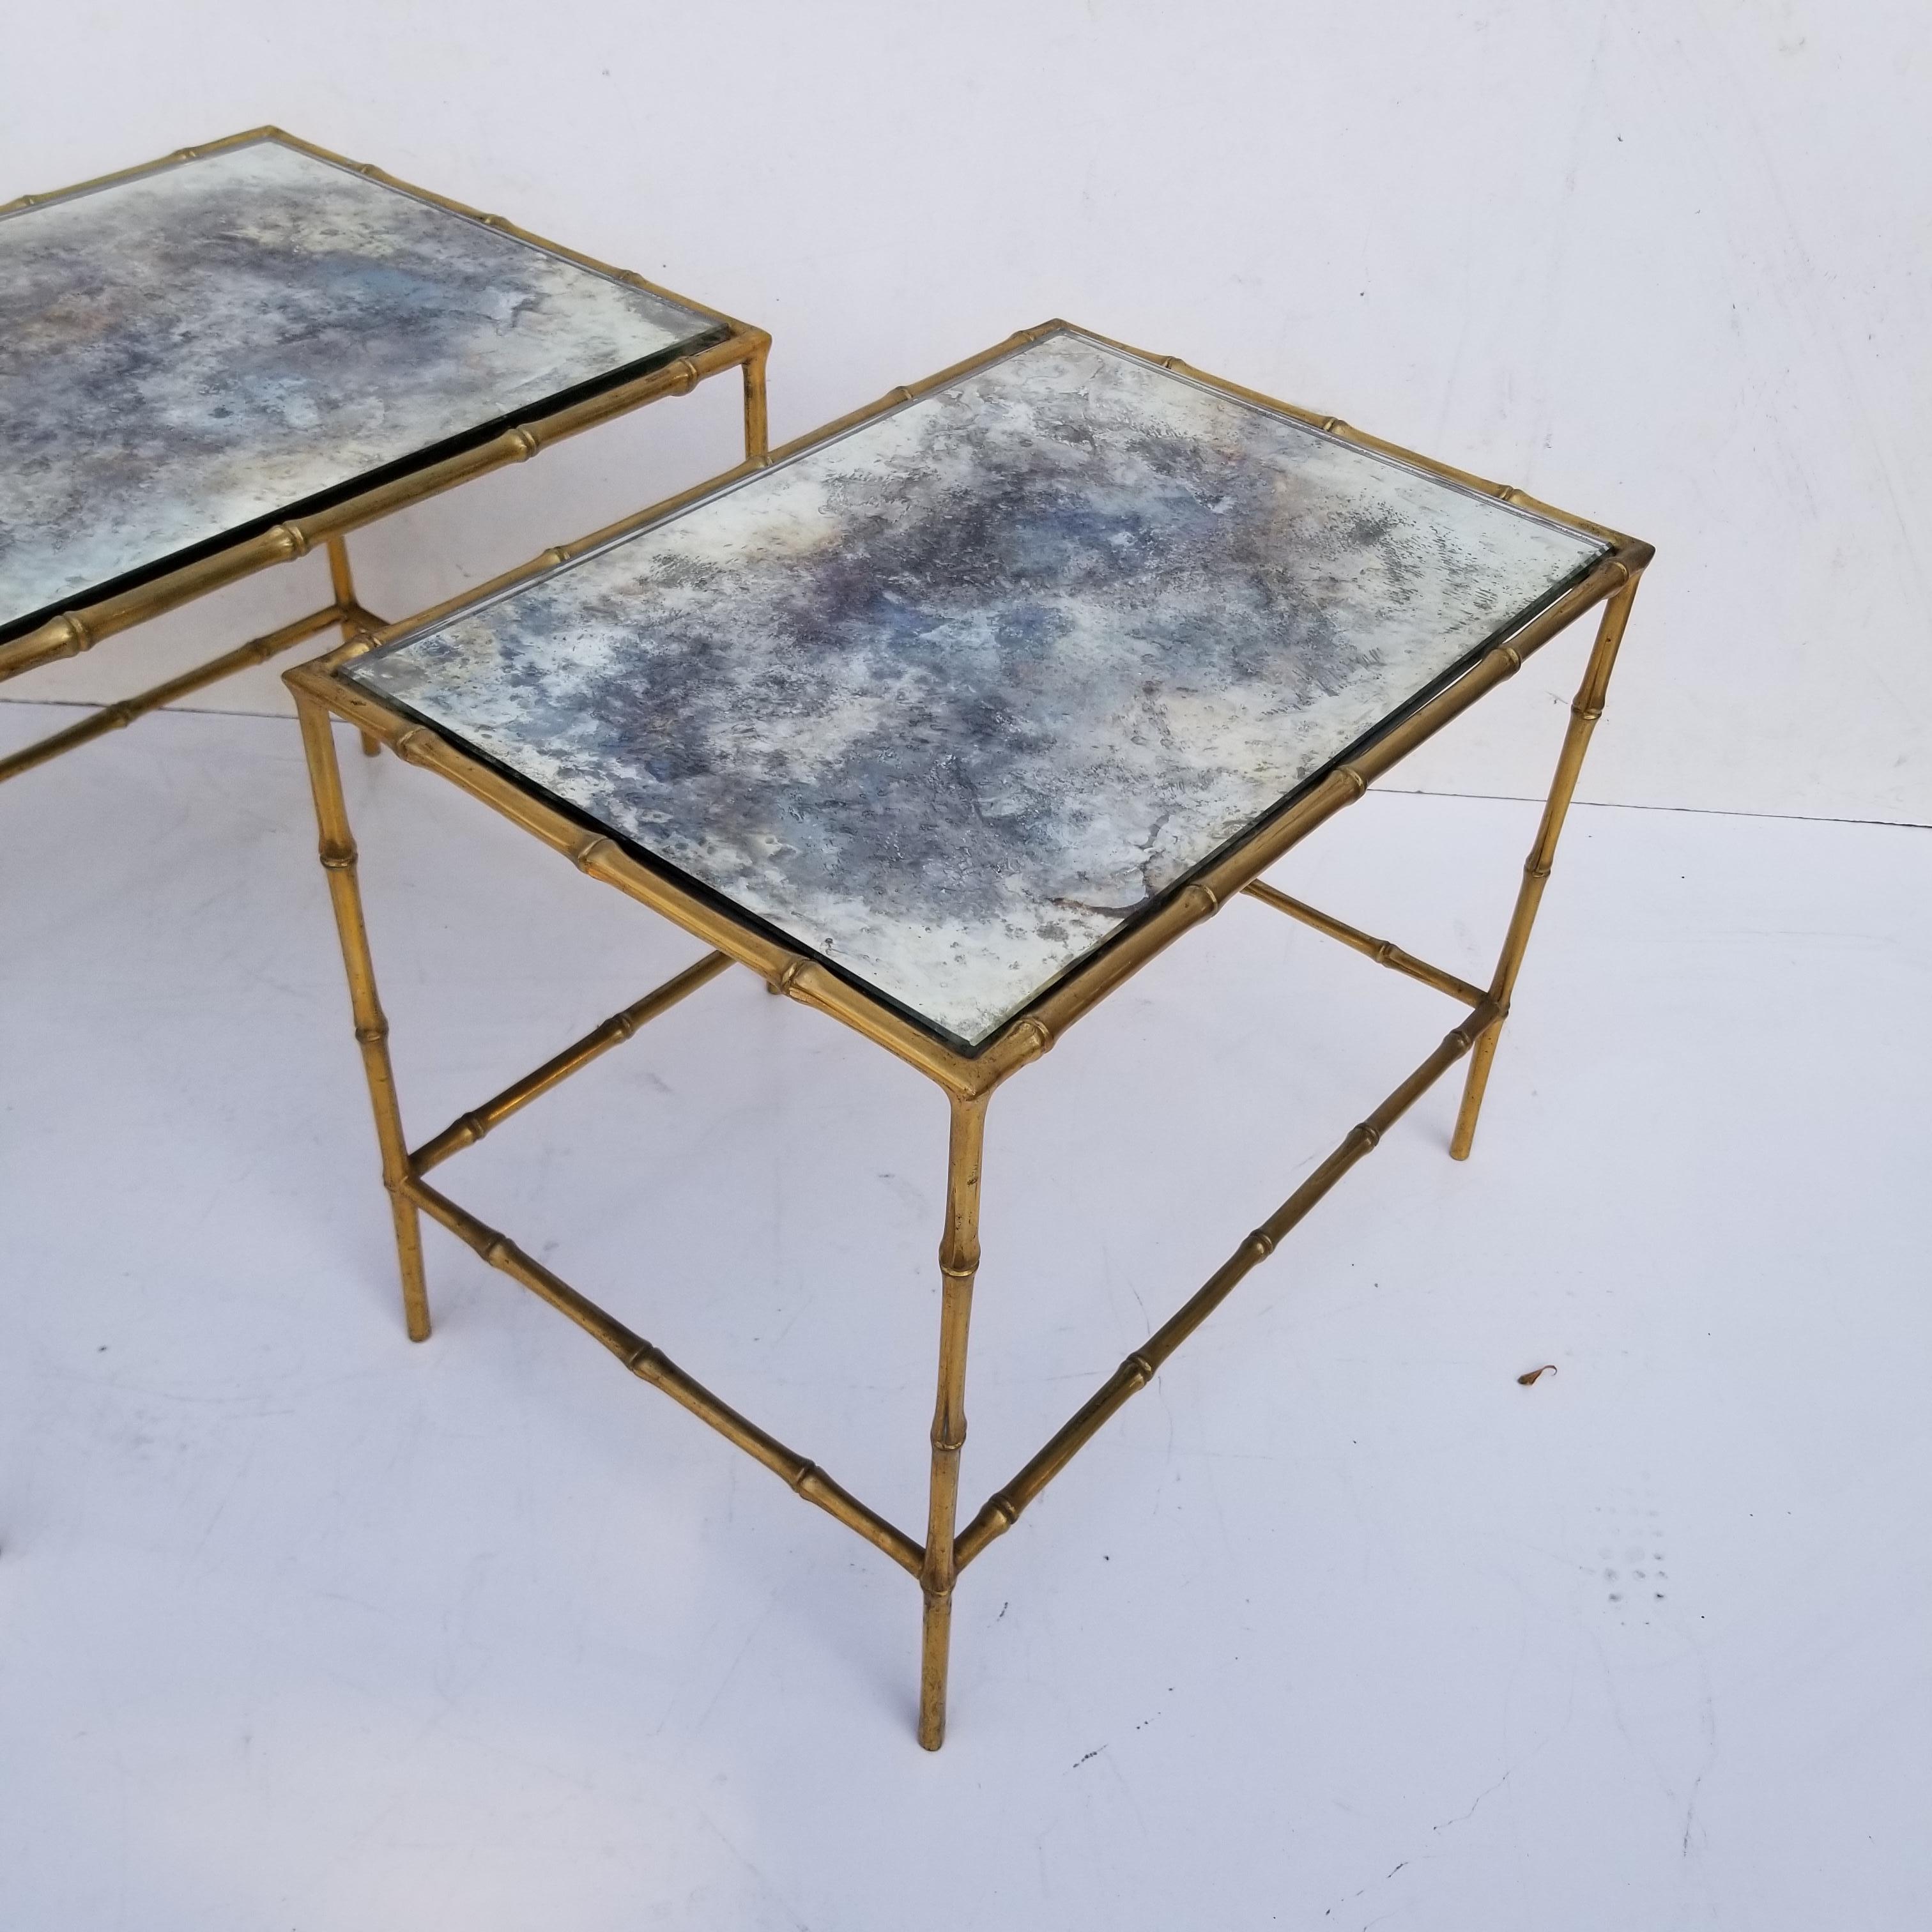 Set of 3 Maison Baguès nesting table, bronze bamboo shape, original cloudy mirrors
Dimensions:
20 W / 14 D / 16 H
18 / 13 / 15
17 / 12 / 14.